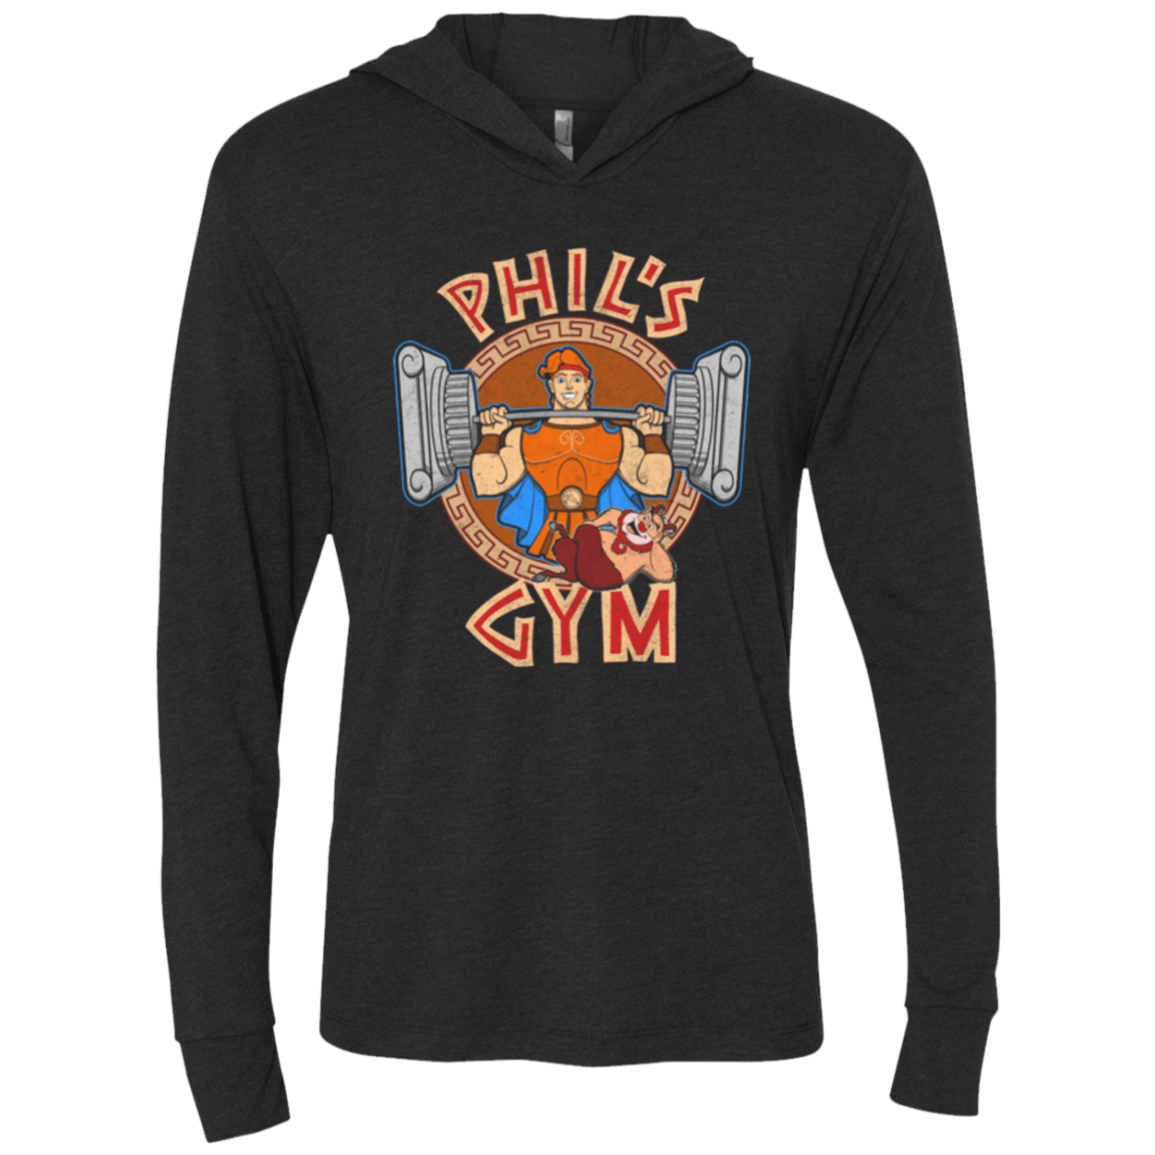 T-Shirts Vintage Black / X-Small Phil's Gym Triblend Long Sleeve Hoodie Tee